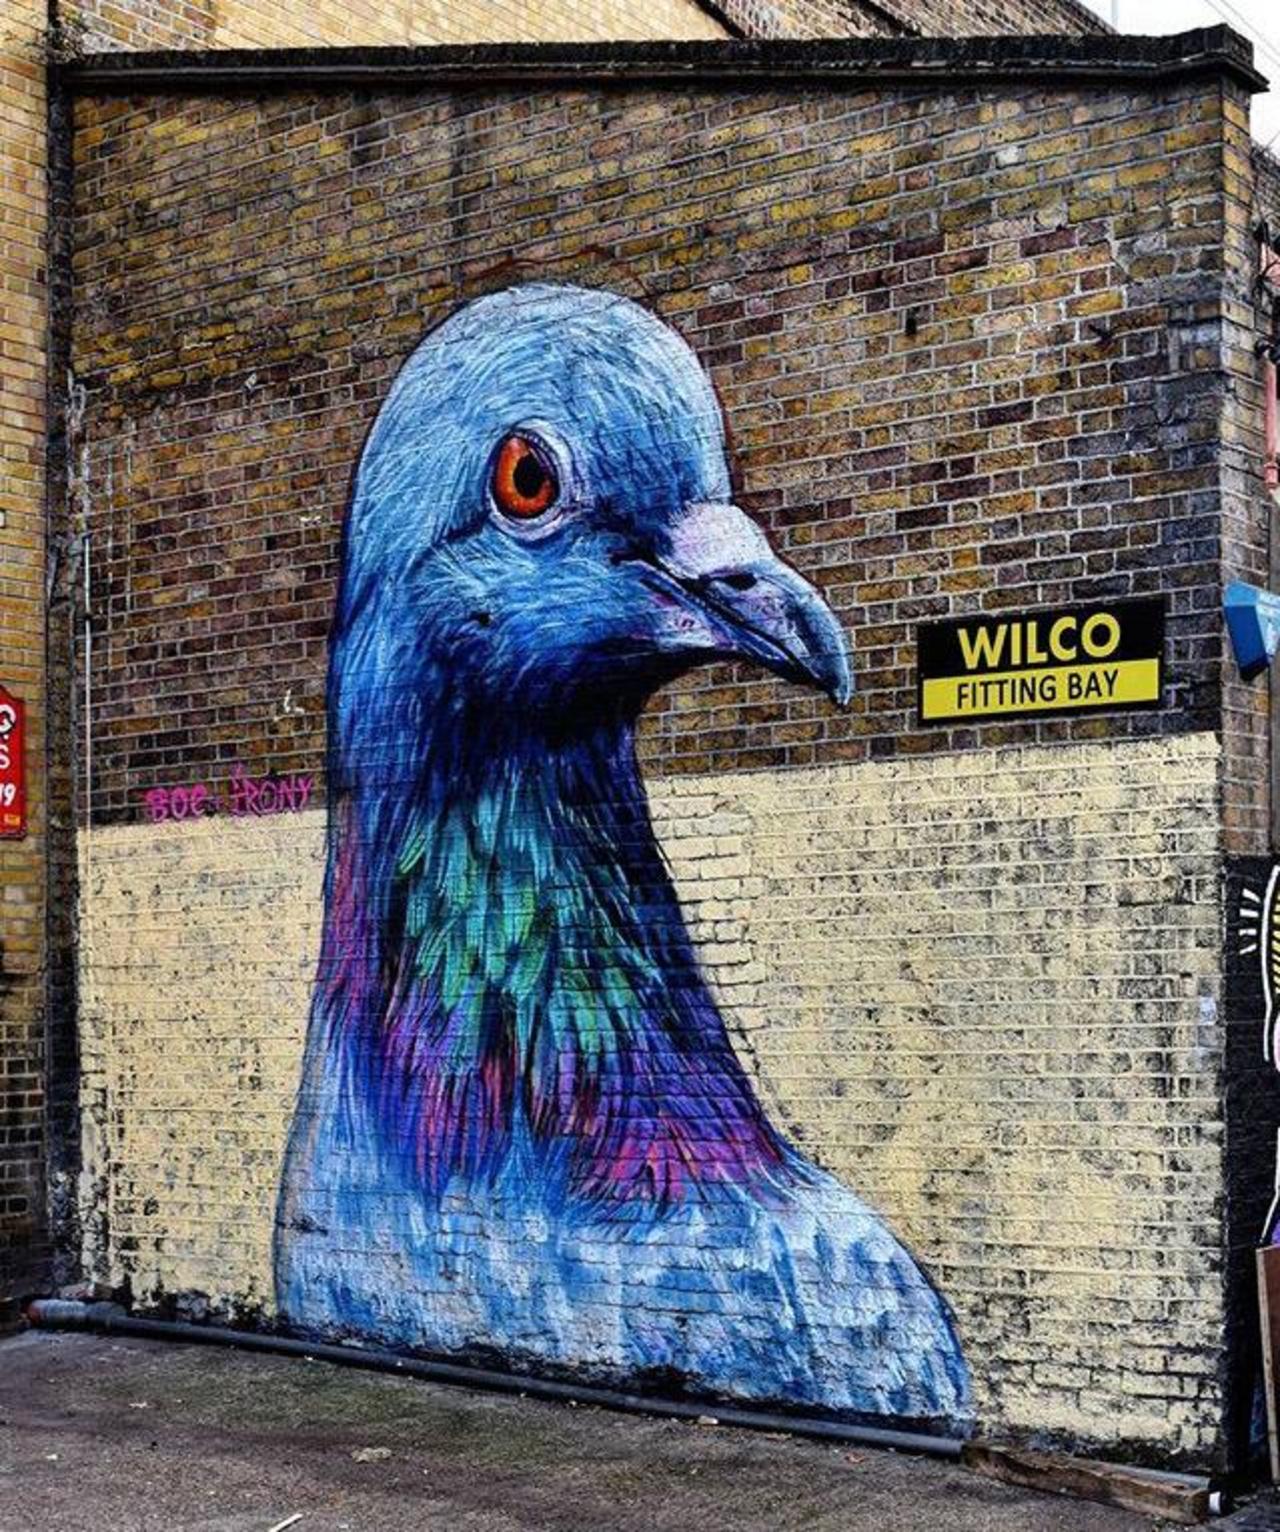 Street Art by Placee Boe & whoamirony in London 

#art #graffiti #mural #streetart http://t.co/xrzzJwFQ25 … … … … http://twitter.com/GoogleStreetArt/status/652357036542414848/photo/1/large?utm_source=fb&utm_medium=fb&utm_campaign=charlesjackso14&utm_content=652361061857951745